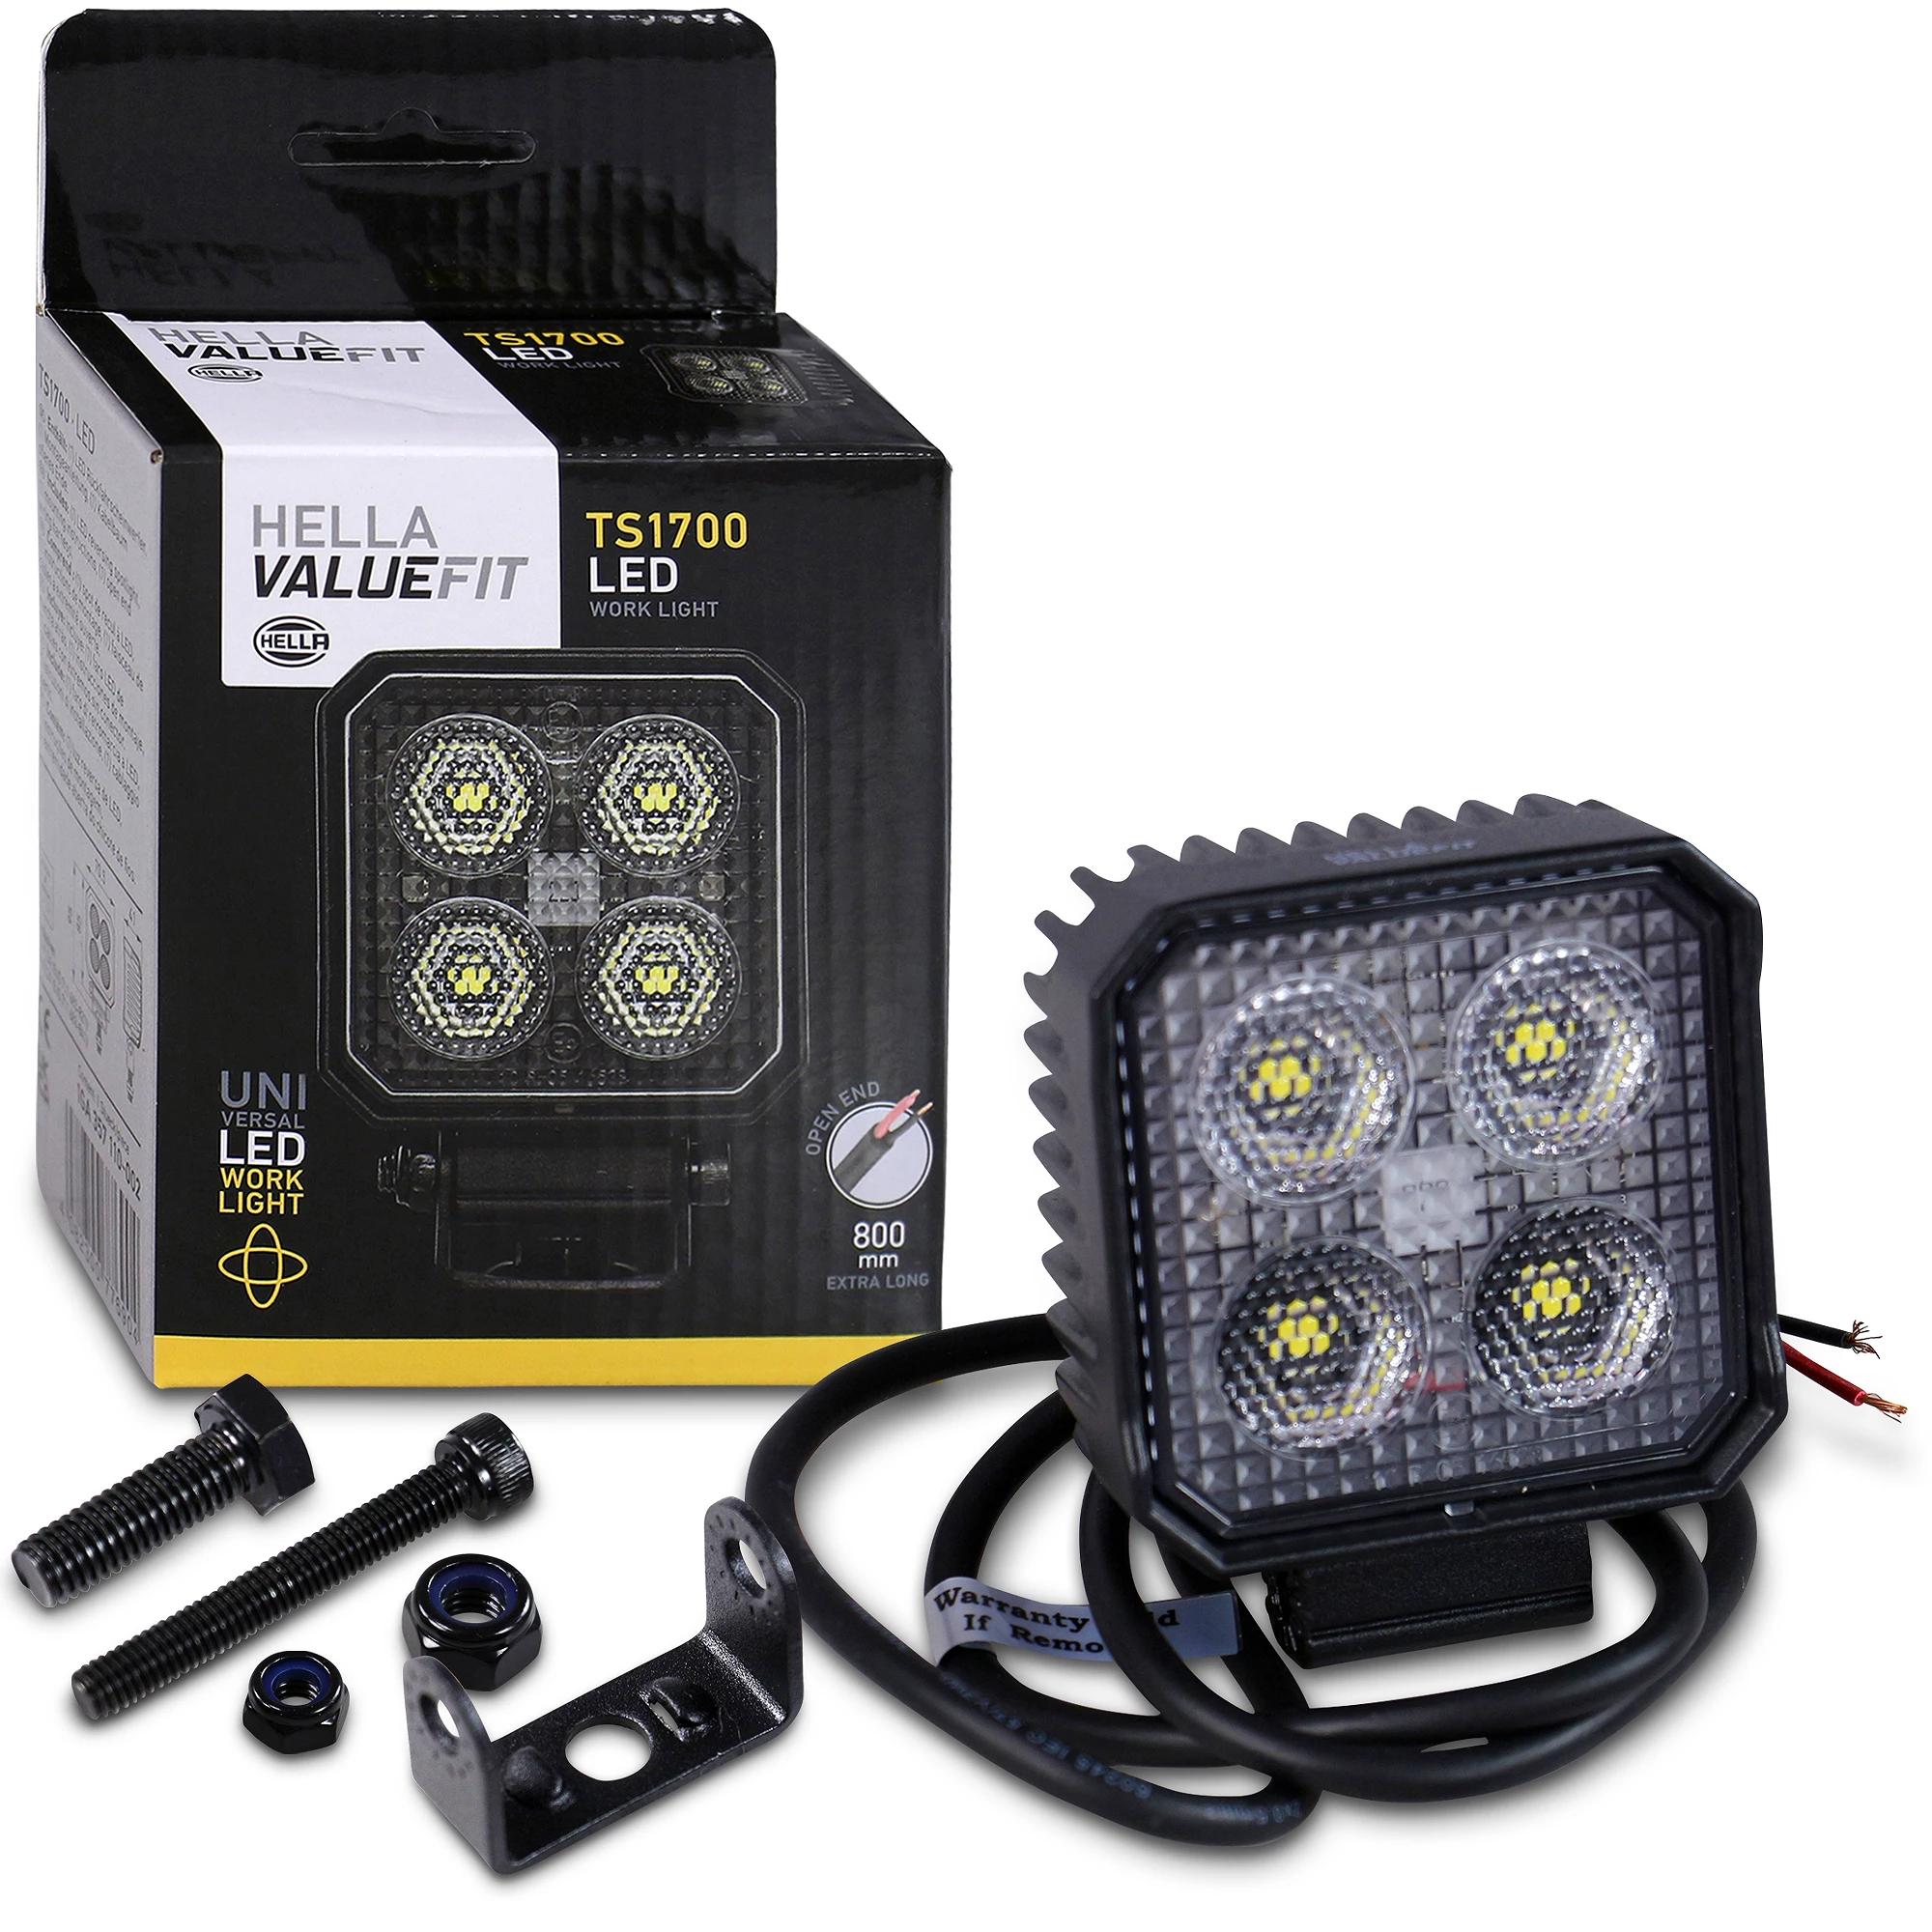 HELLA - LED-Arbeitsscheinwerfer - Valuefit O1200 - 12/24V - 1200lm